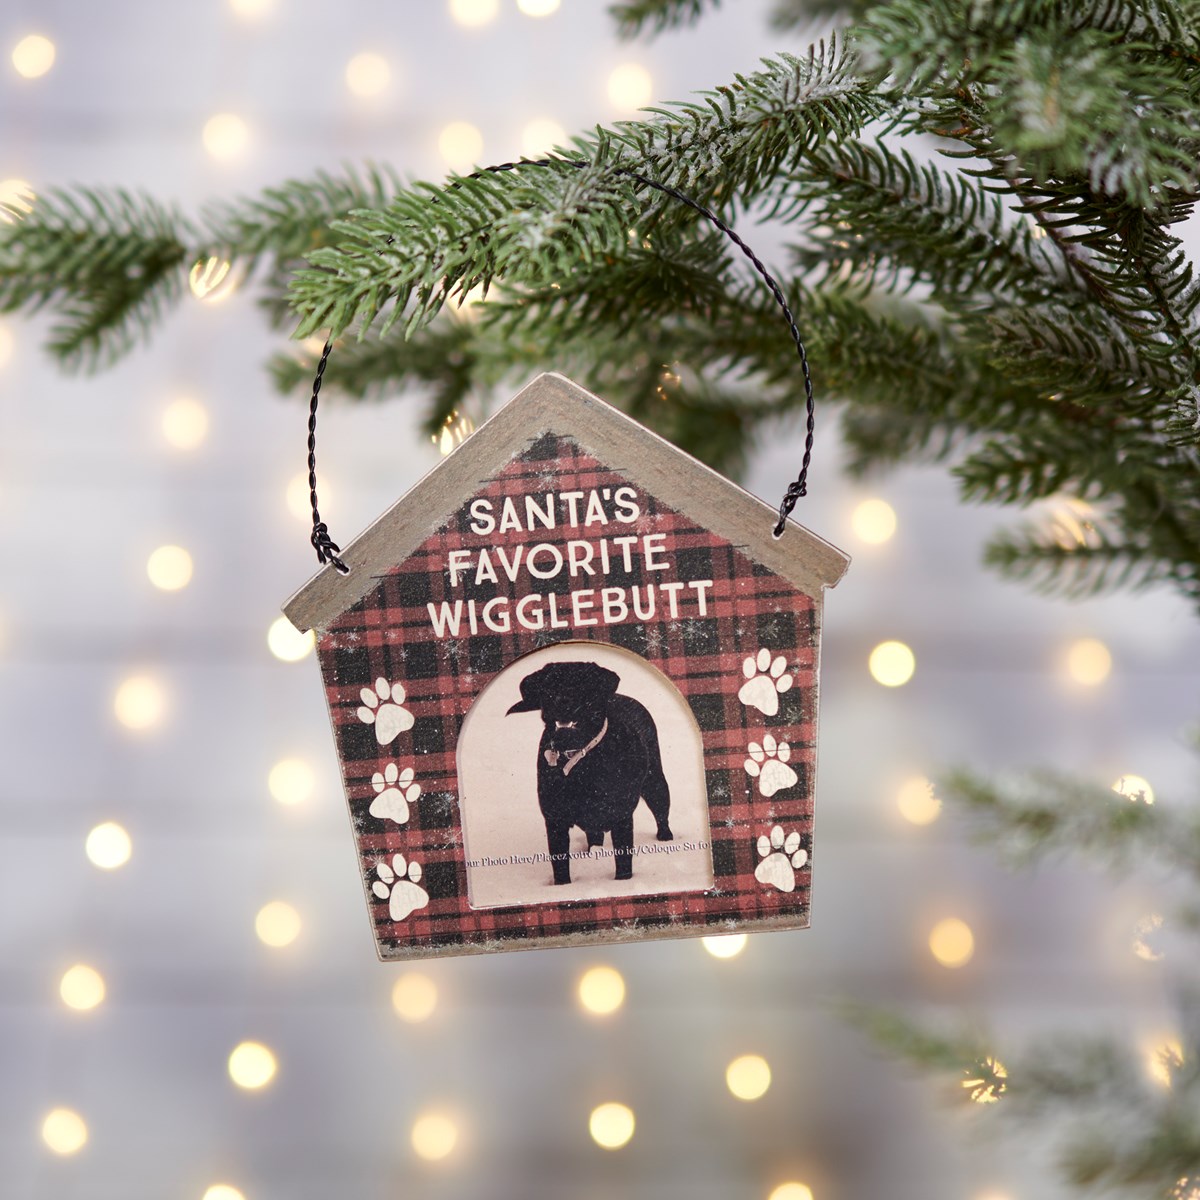 Santa's Favorite Mini Frame - Wood, Paper, Plastic, Wire, Magnet